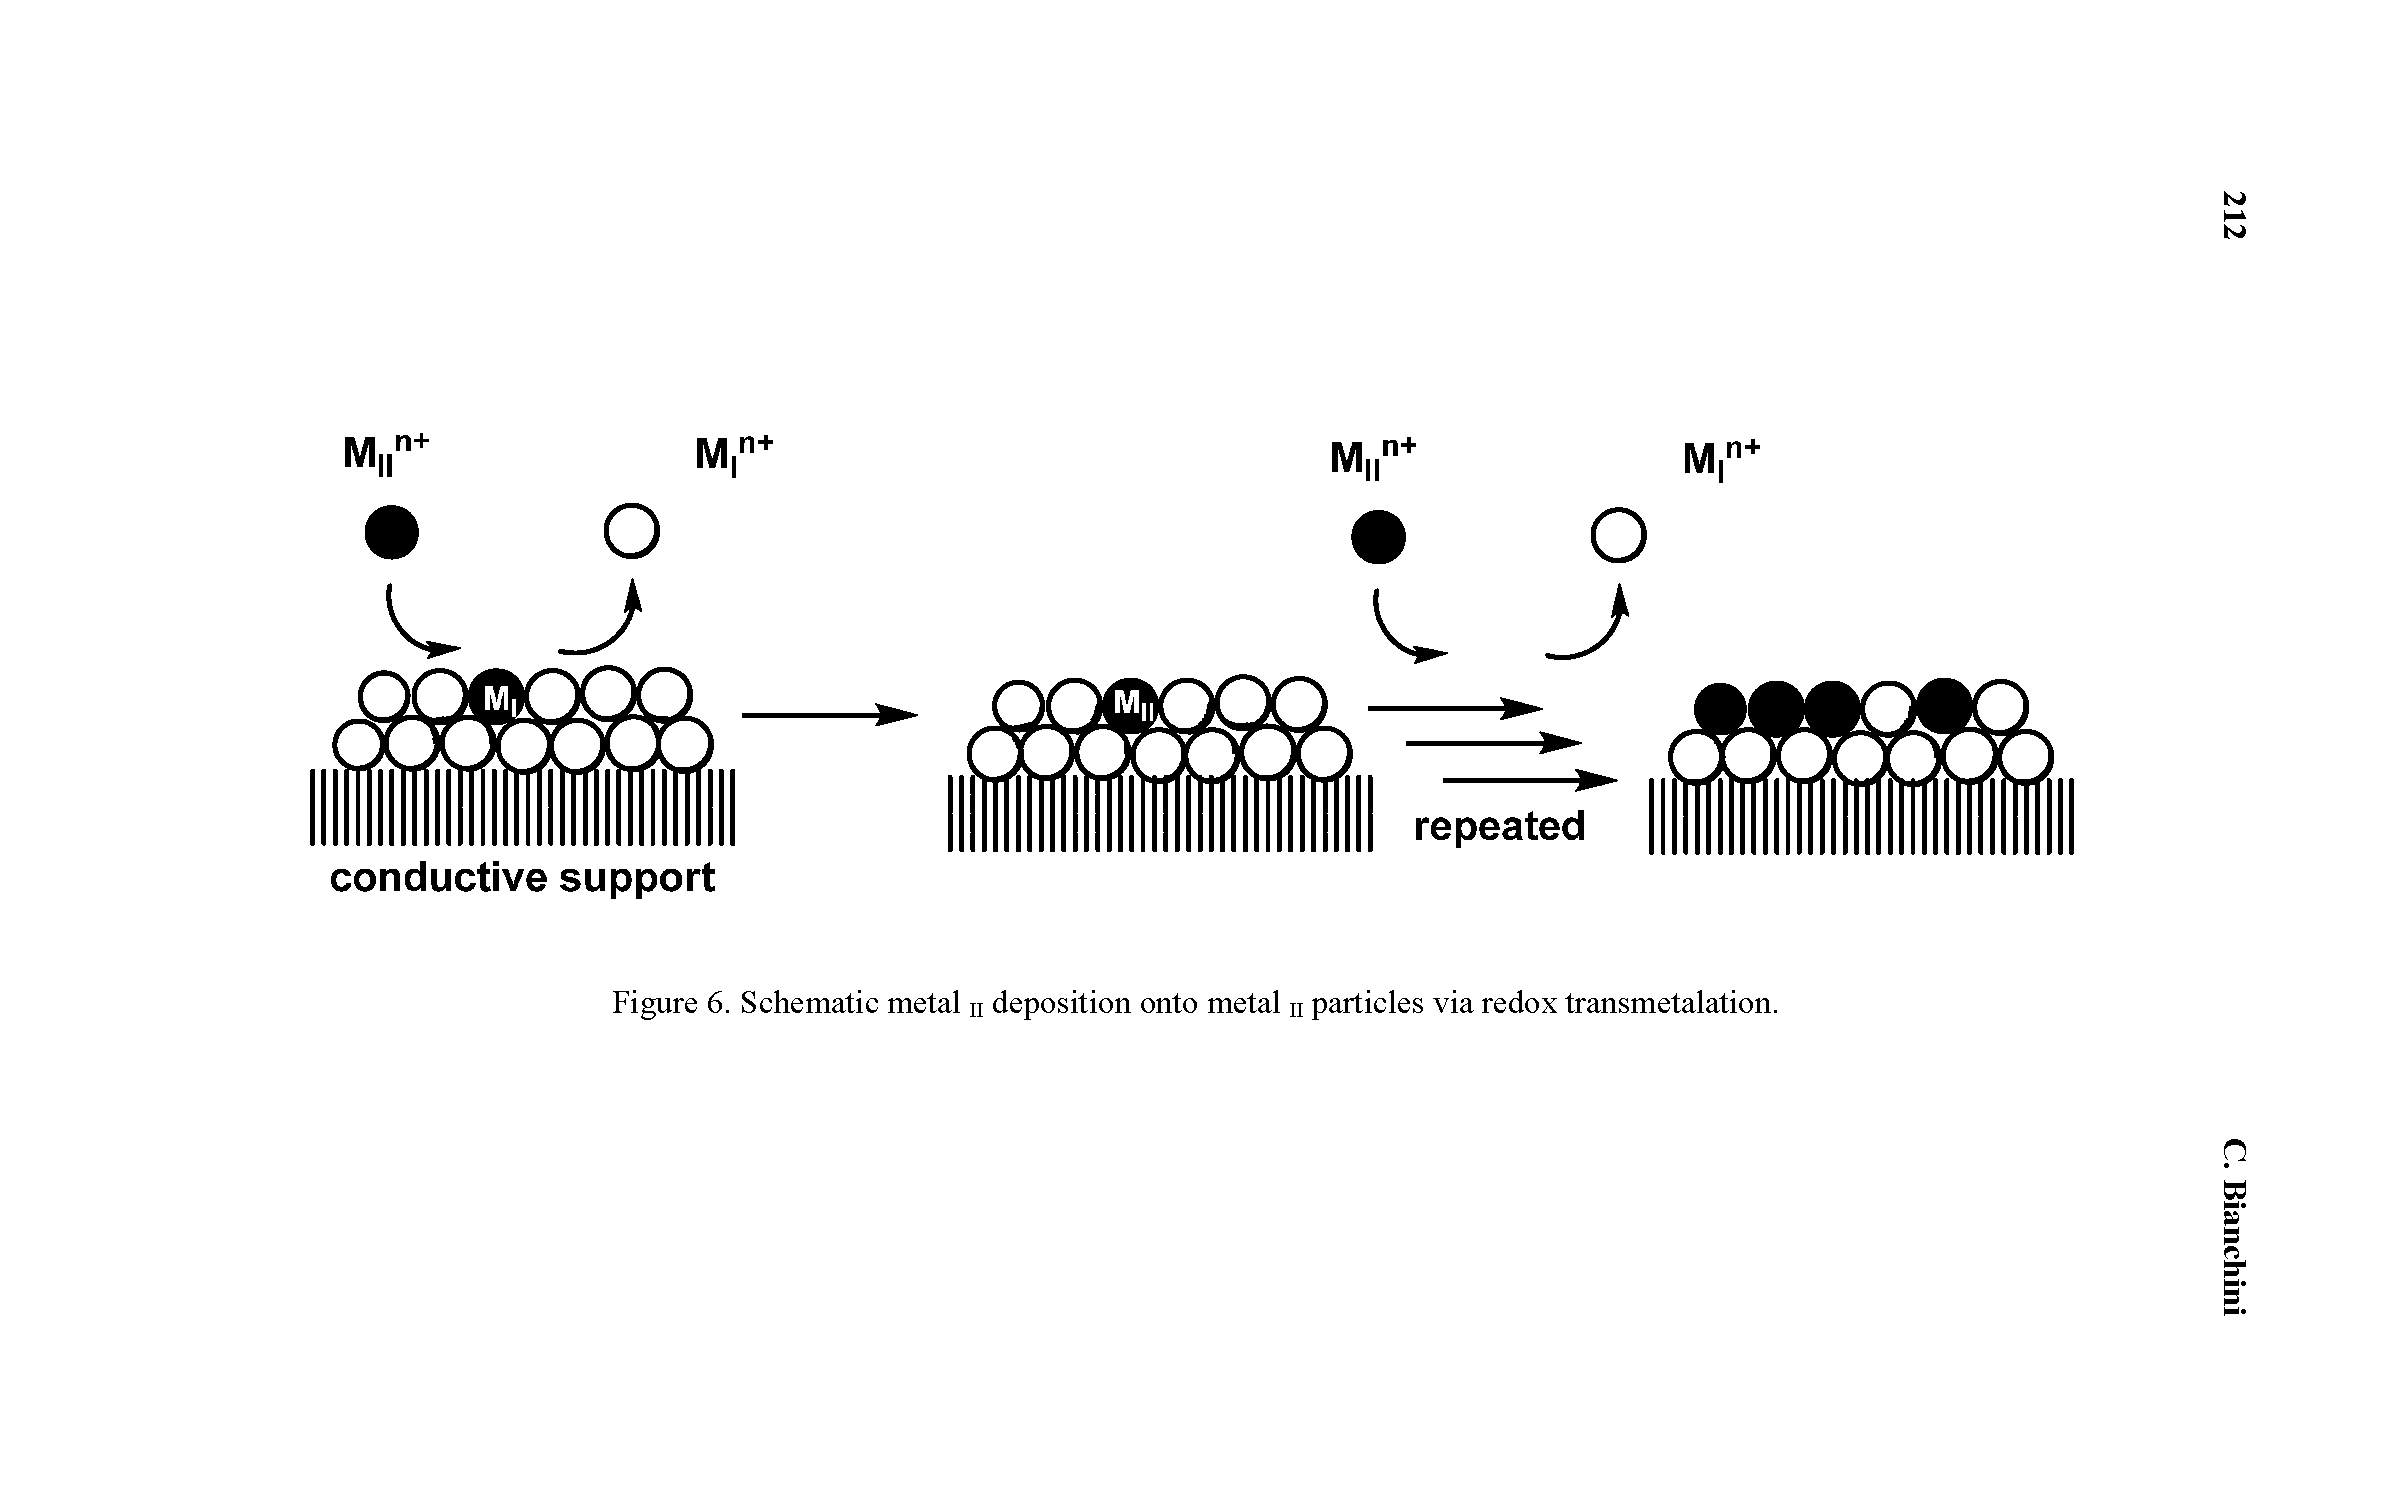 Figure 6. Schematic metal n deposition onto metal n particles via redox transmetalation.